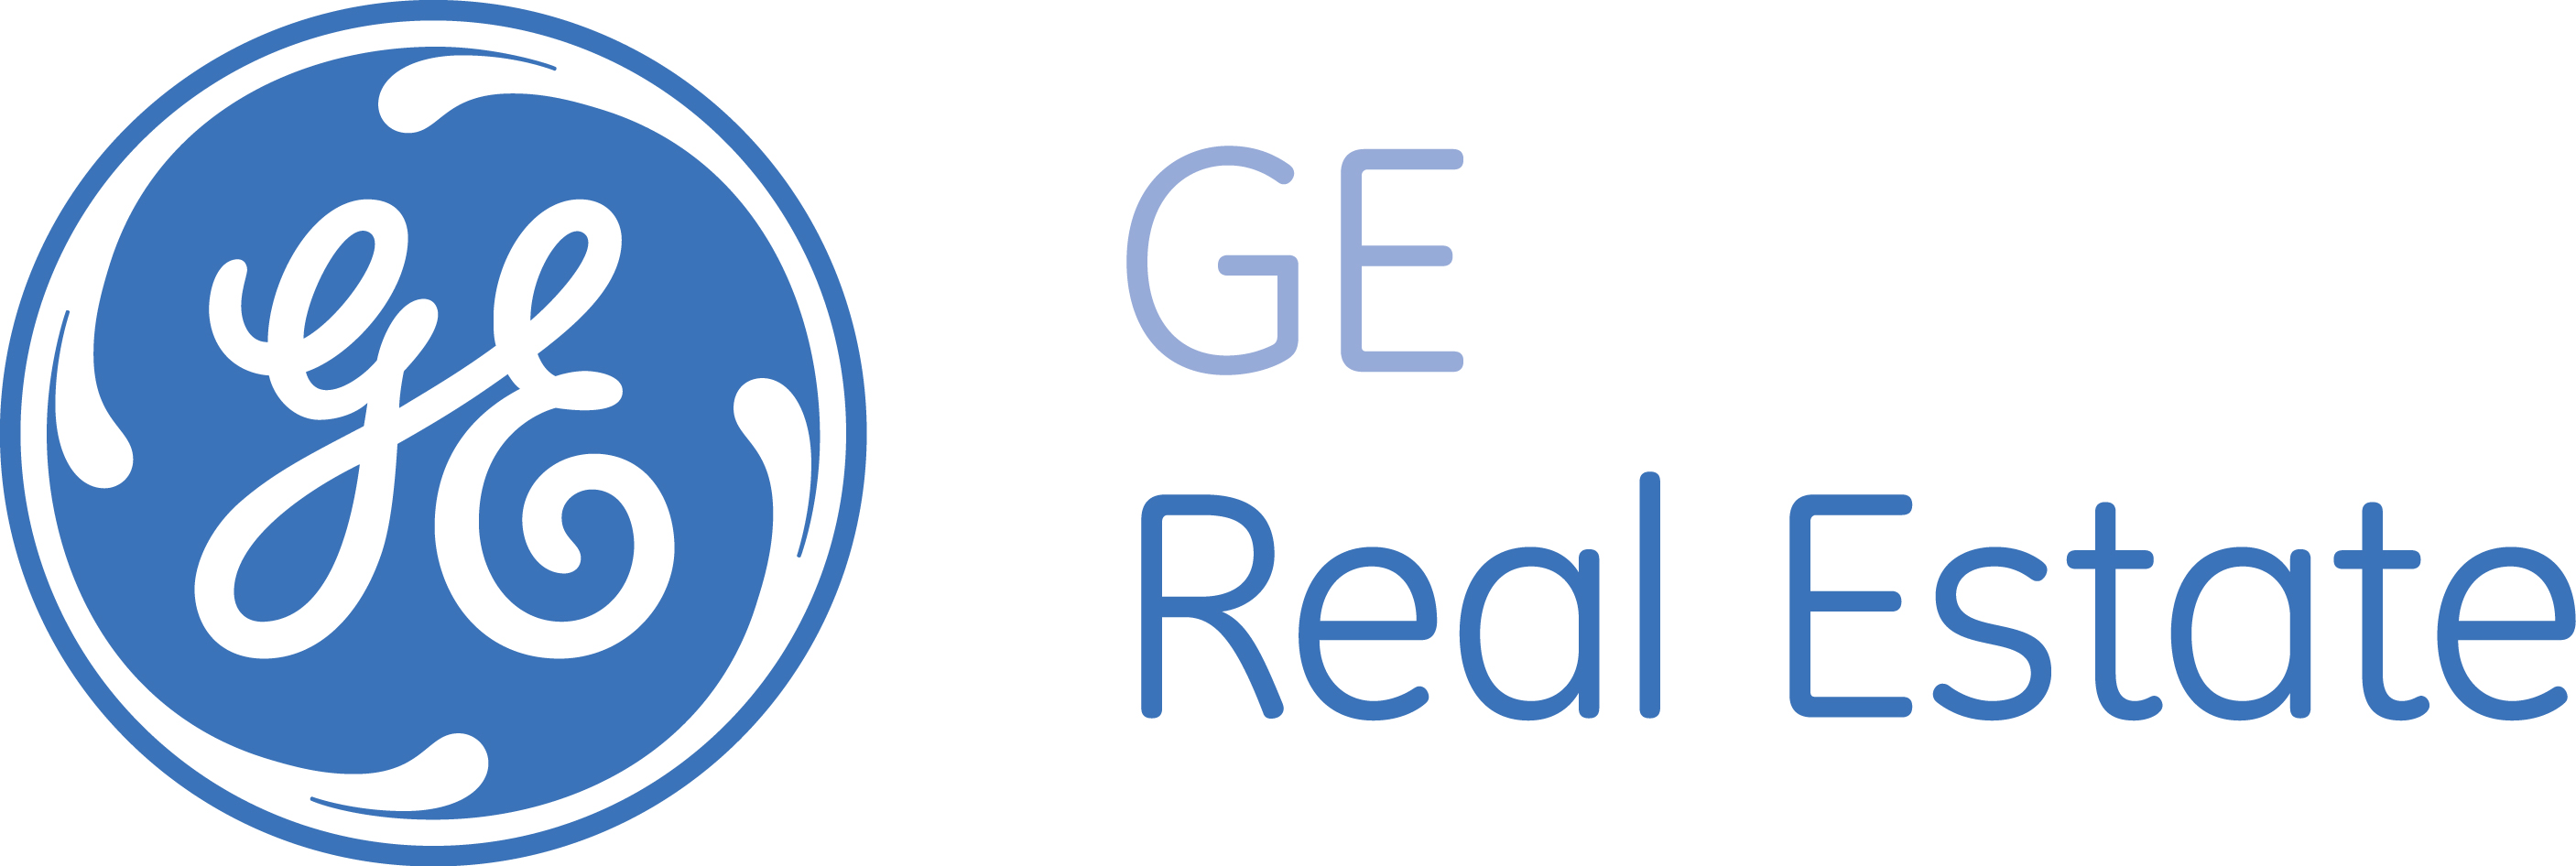 GE Real Estate